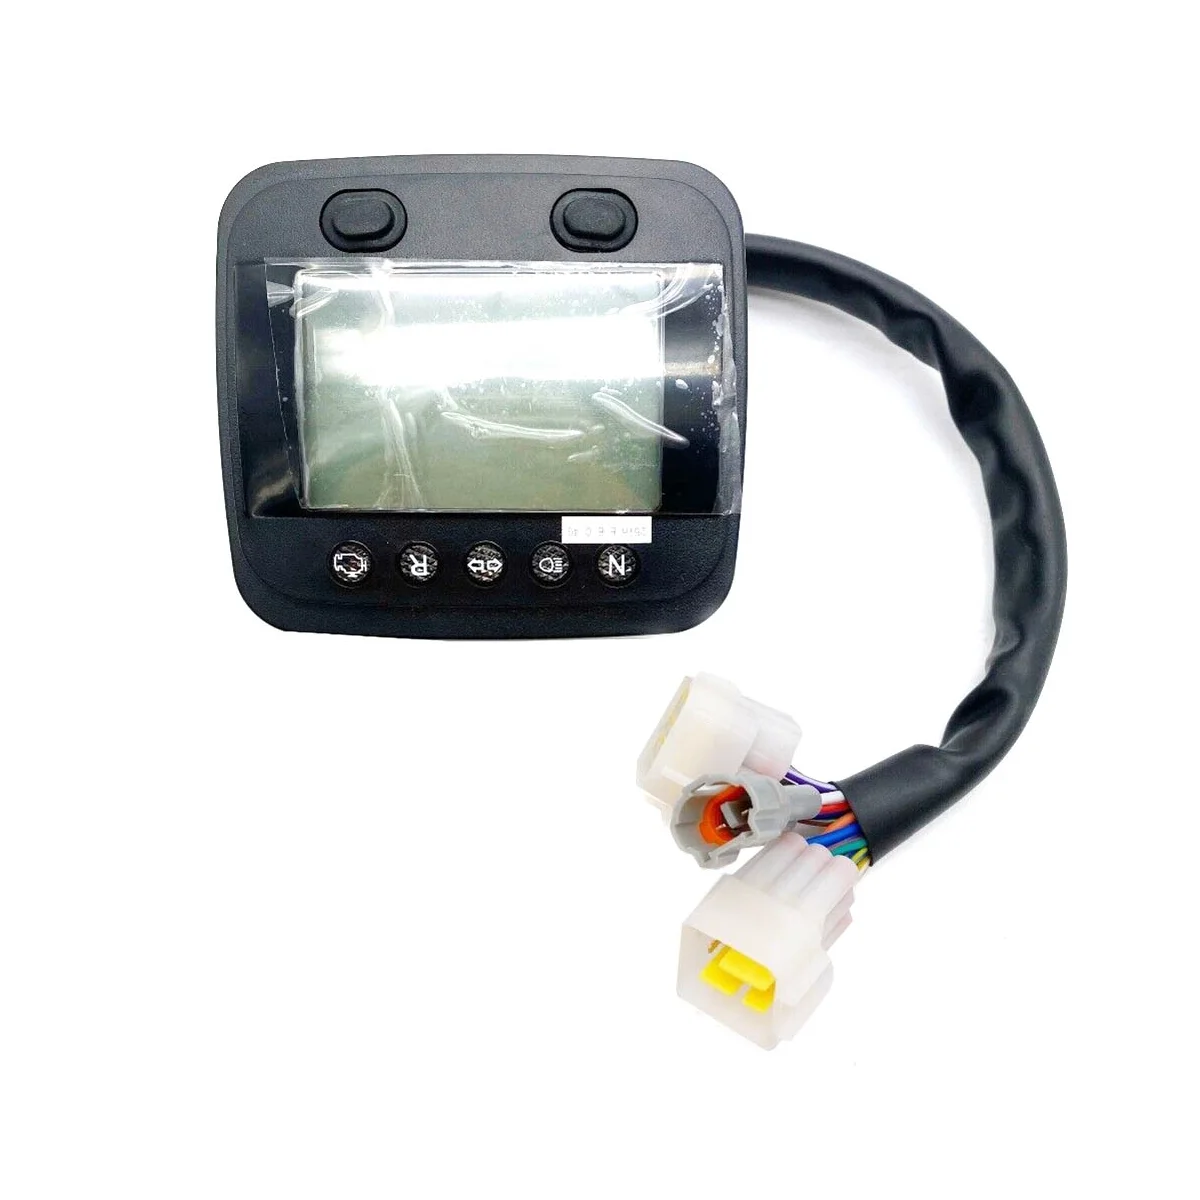 

EFI Model LCD Speedometer Meter Assy Fit for Linhai Bighorn 450Cc 500Cc LH500 ATV